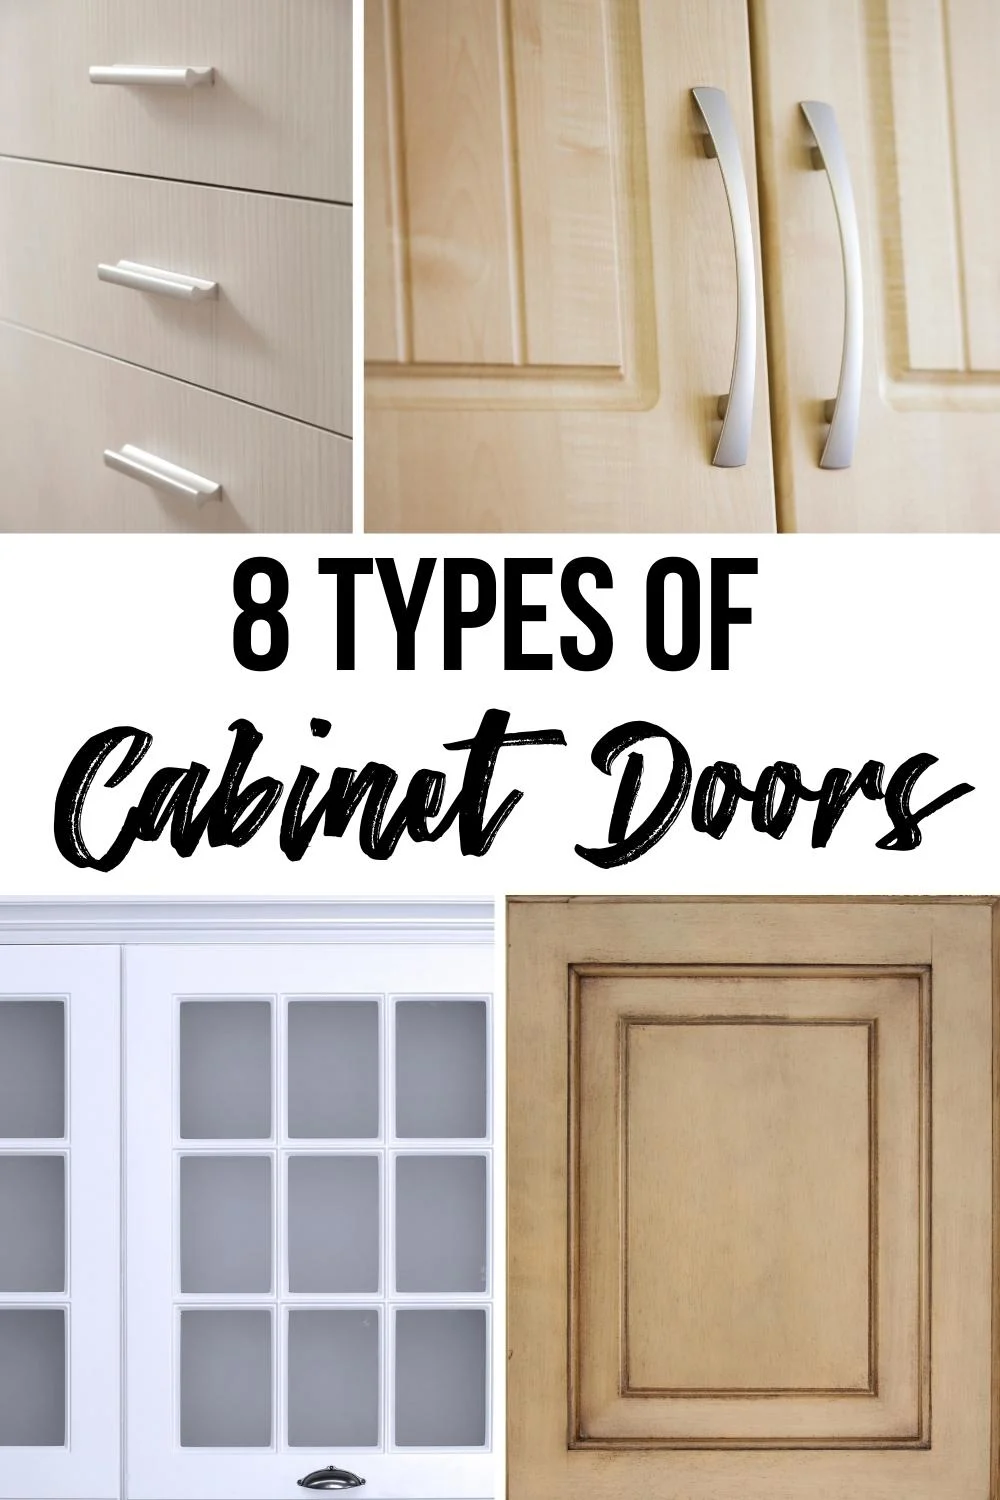 Types of Cabinet Doors - 8 Popular Styles - The Handyman's Daughter